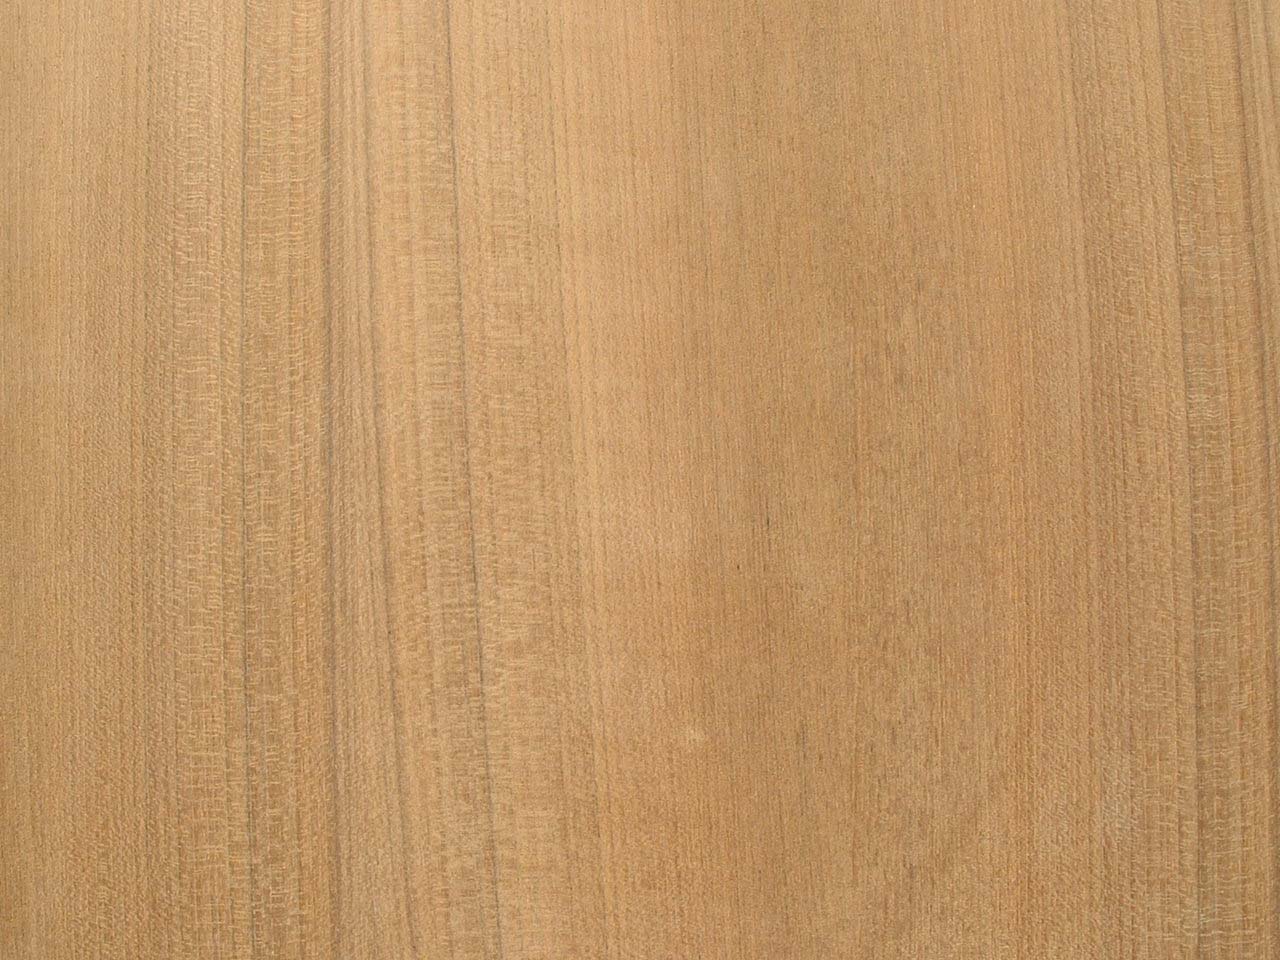 Cherry wood veneer 48" x 24" on paper backer 4' x 2' x 1/40" A grade crossgrain 